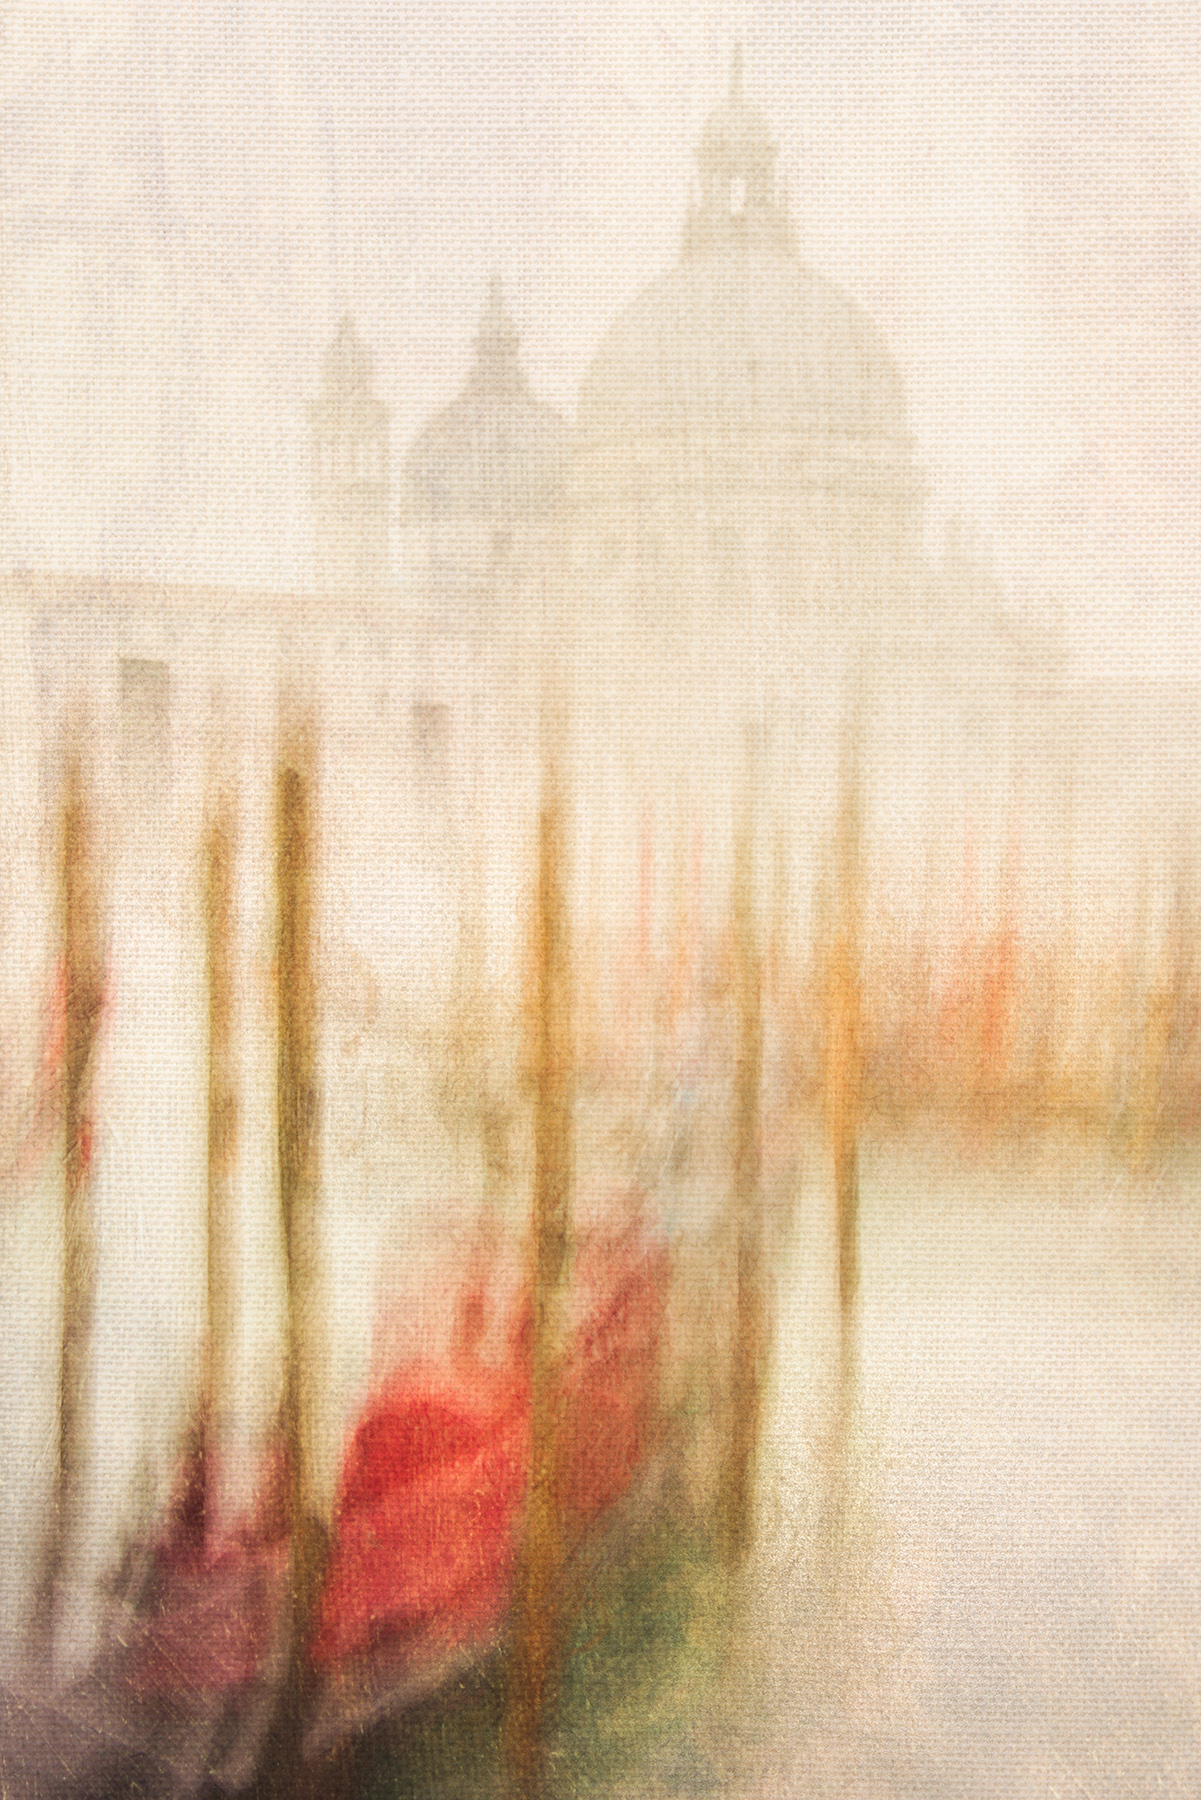 Venice of Dreams © Harold Davis